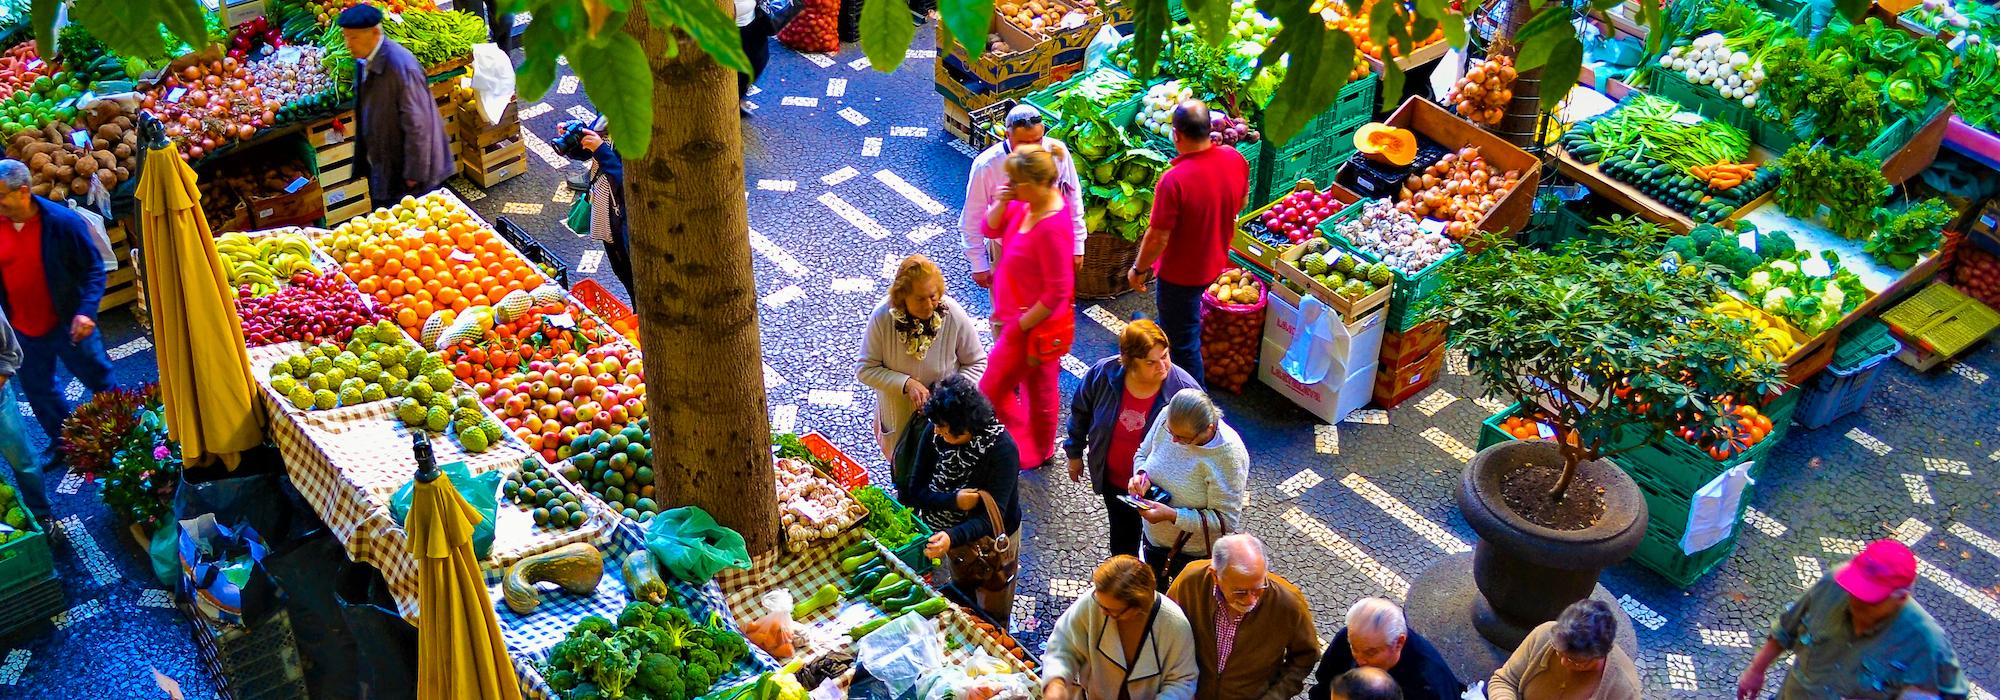 Farm market, Madeira